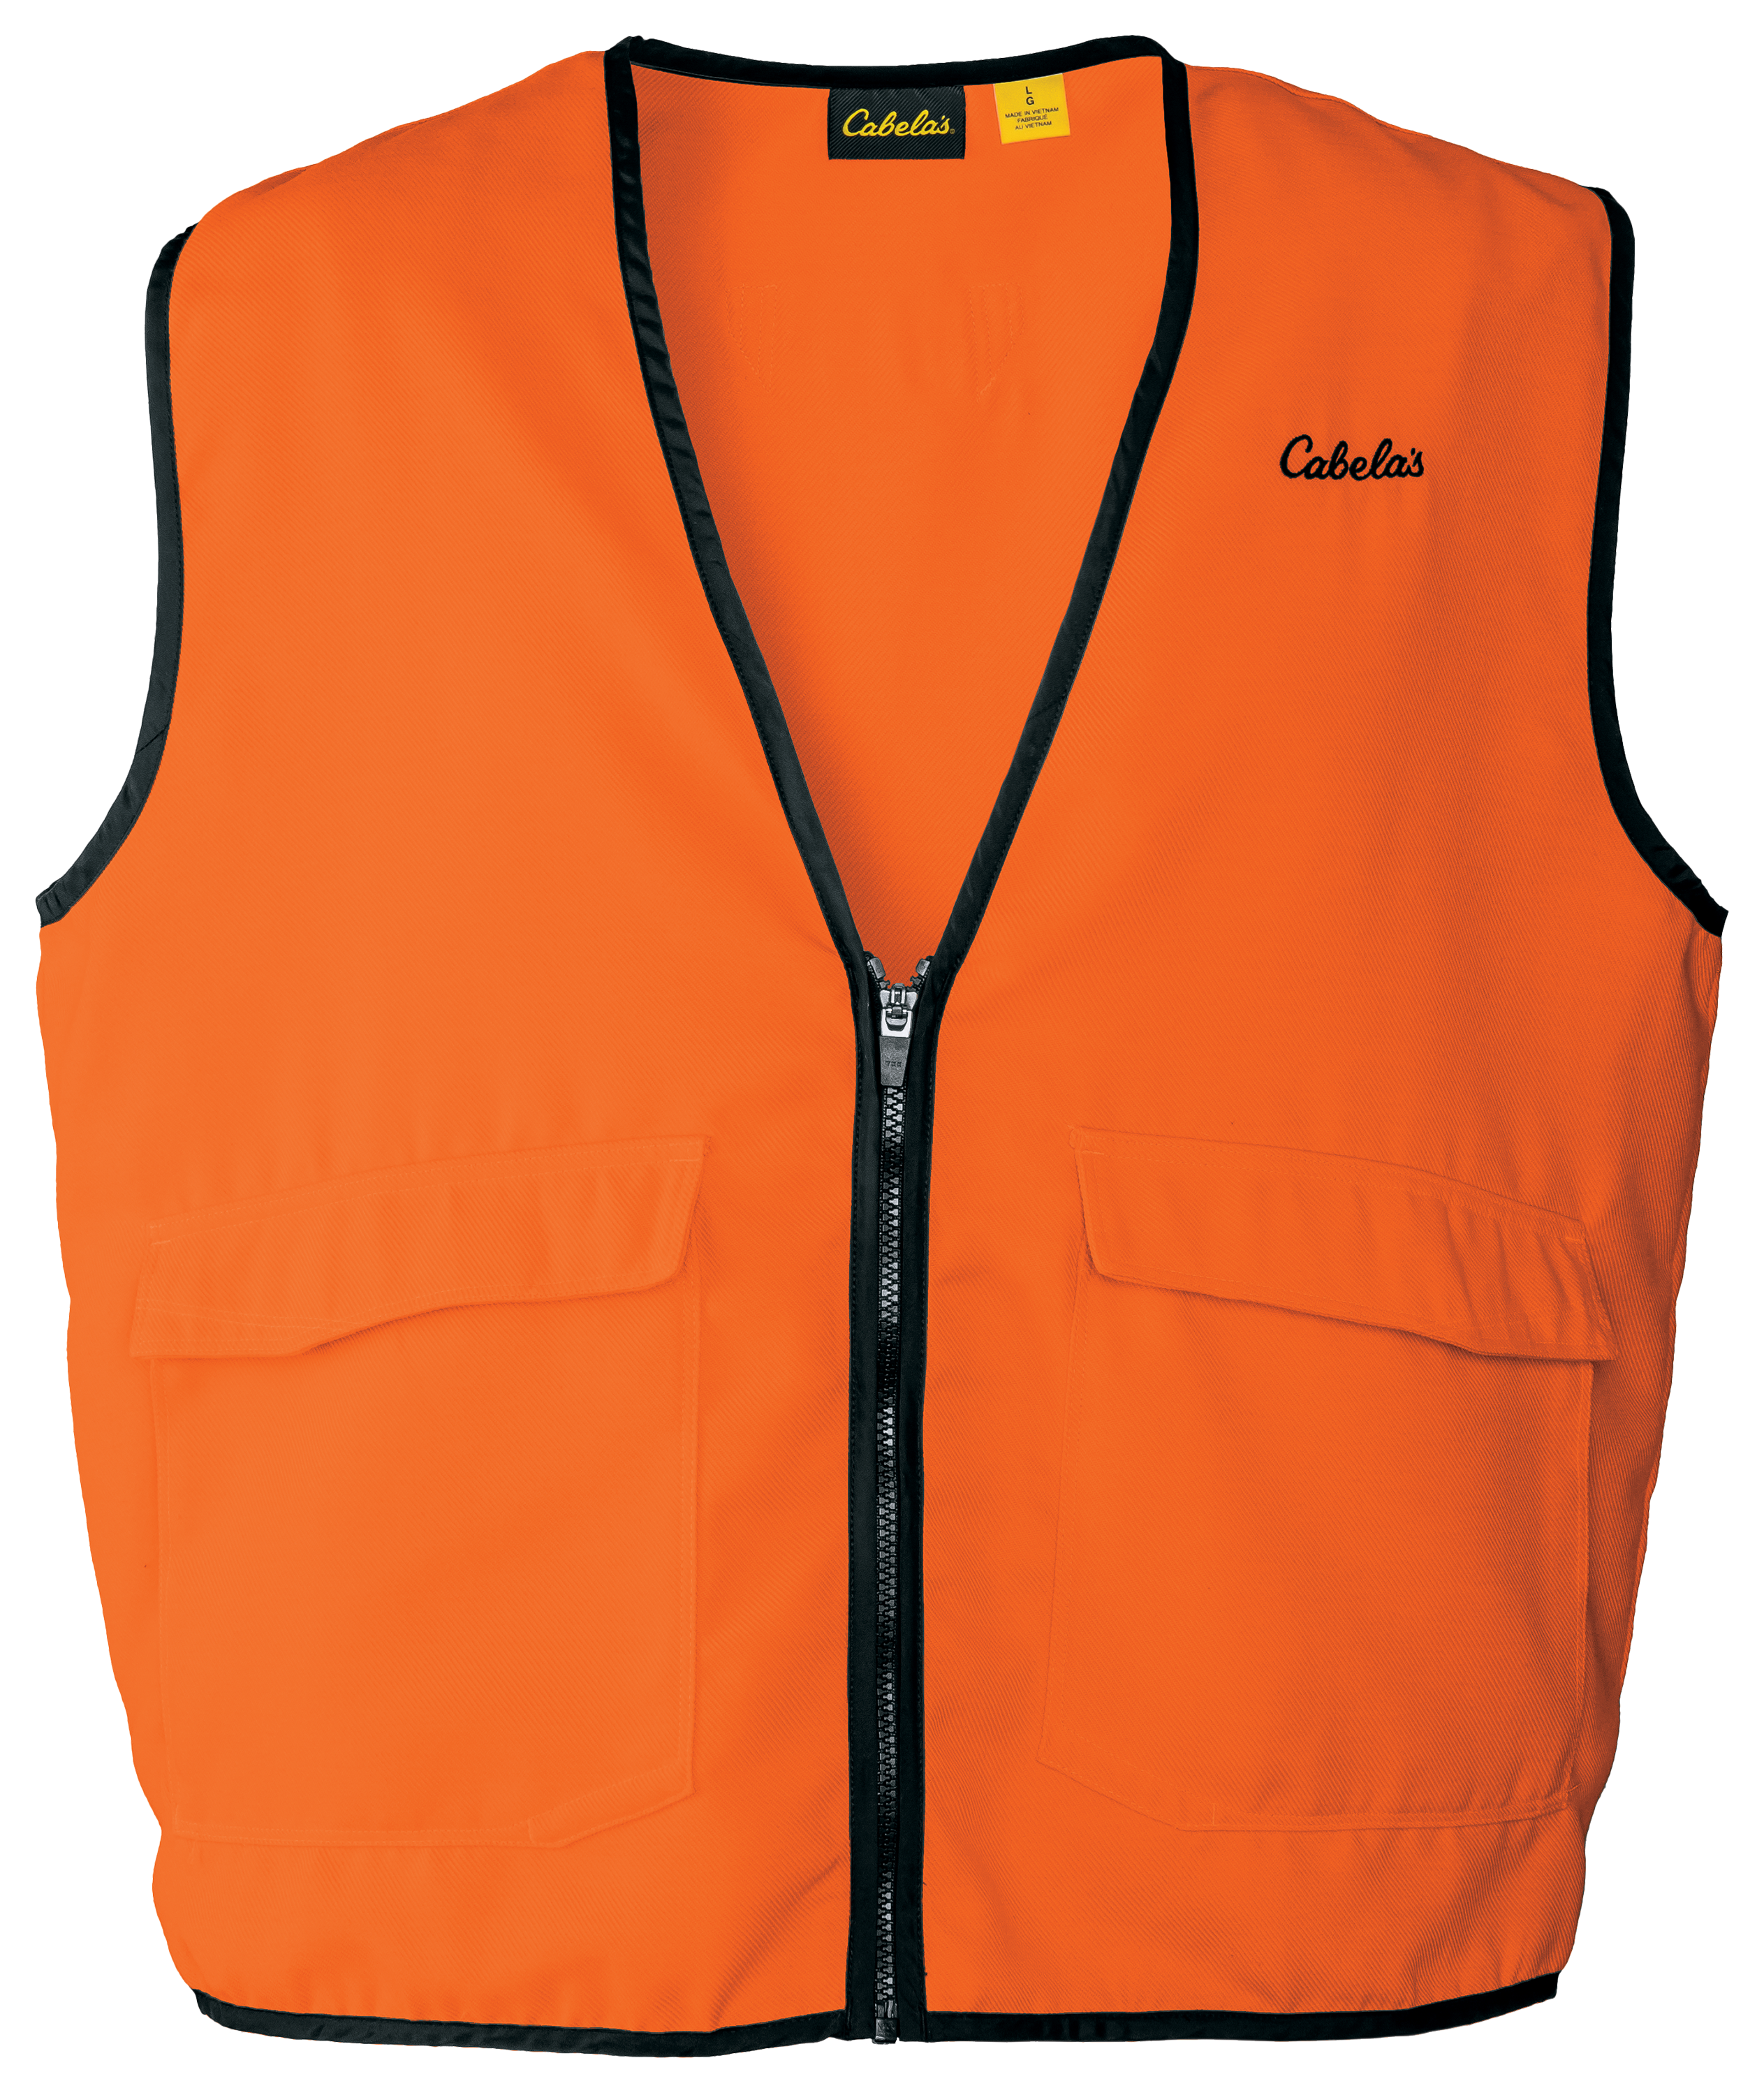 Cabela's Blaze Full-Feature Vest for Men - Blaze Orange - S